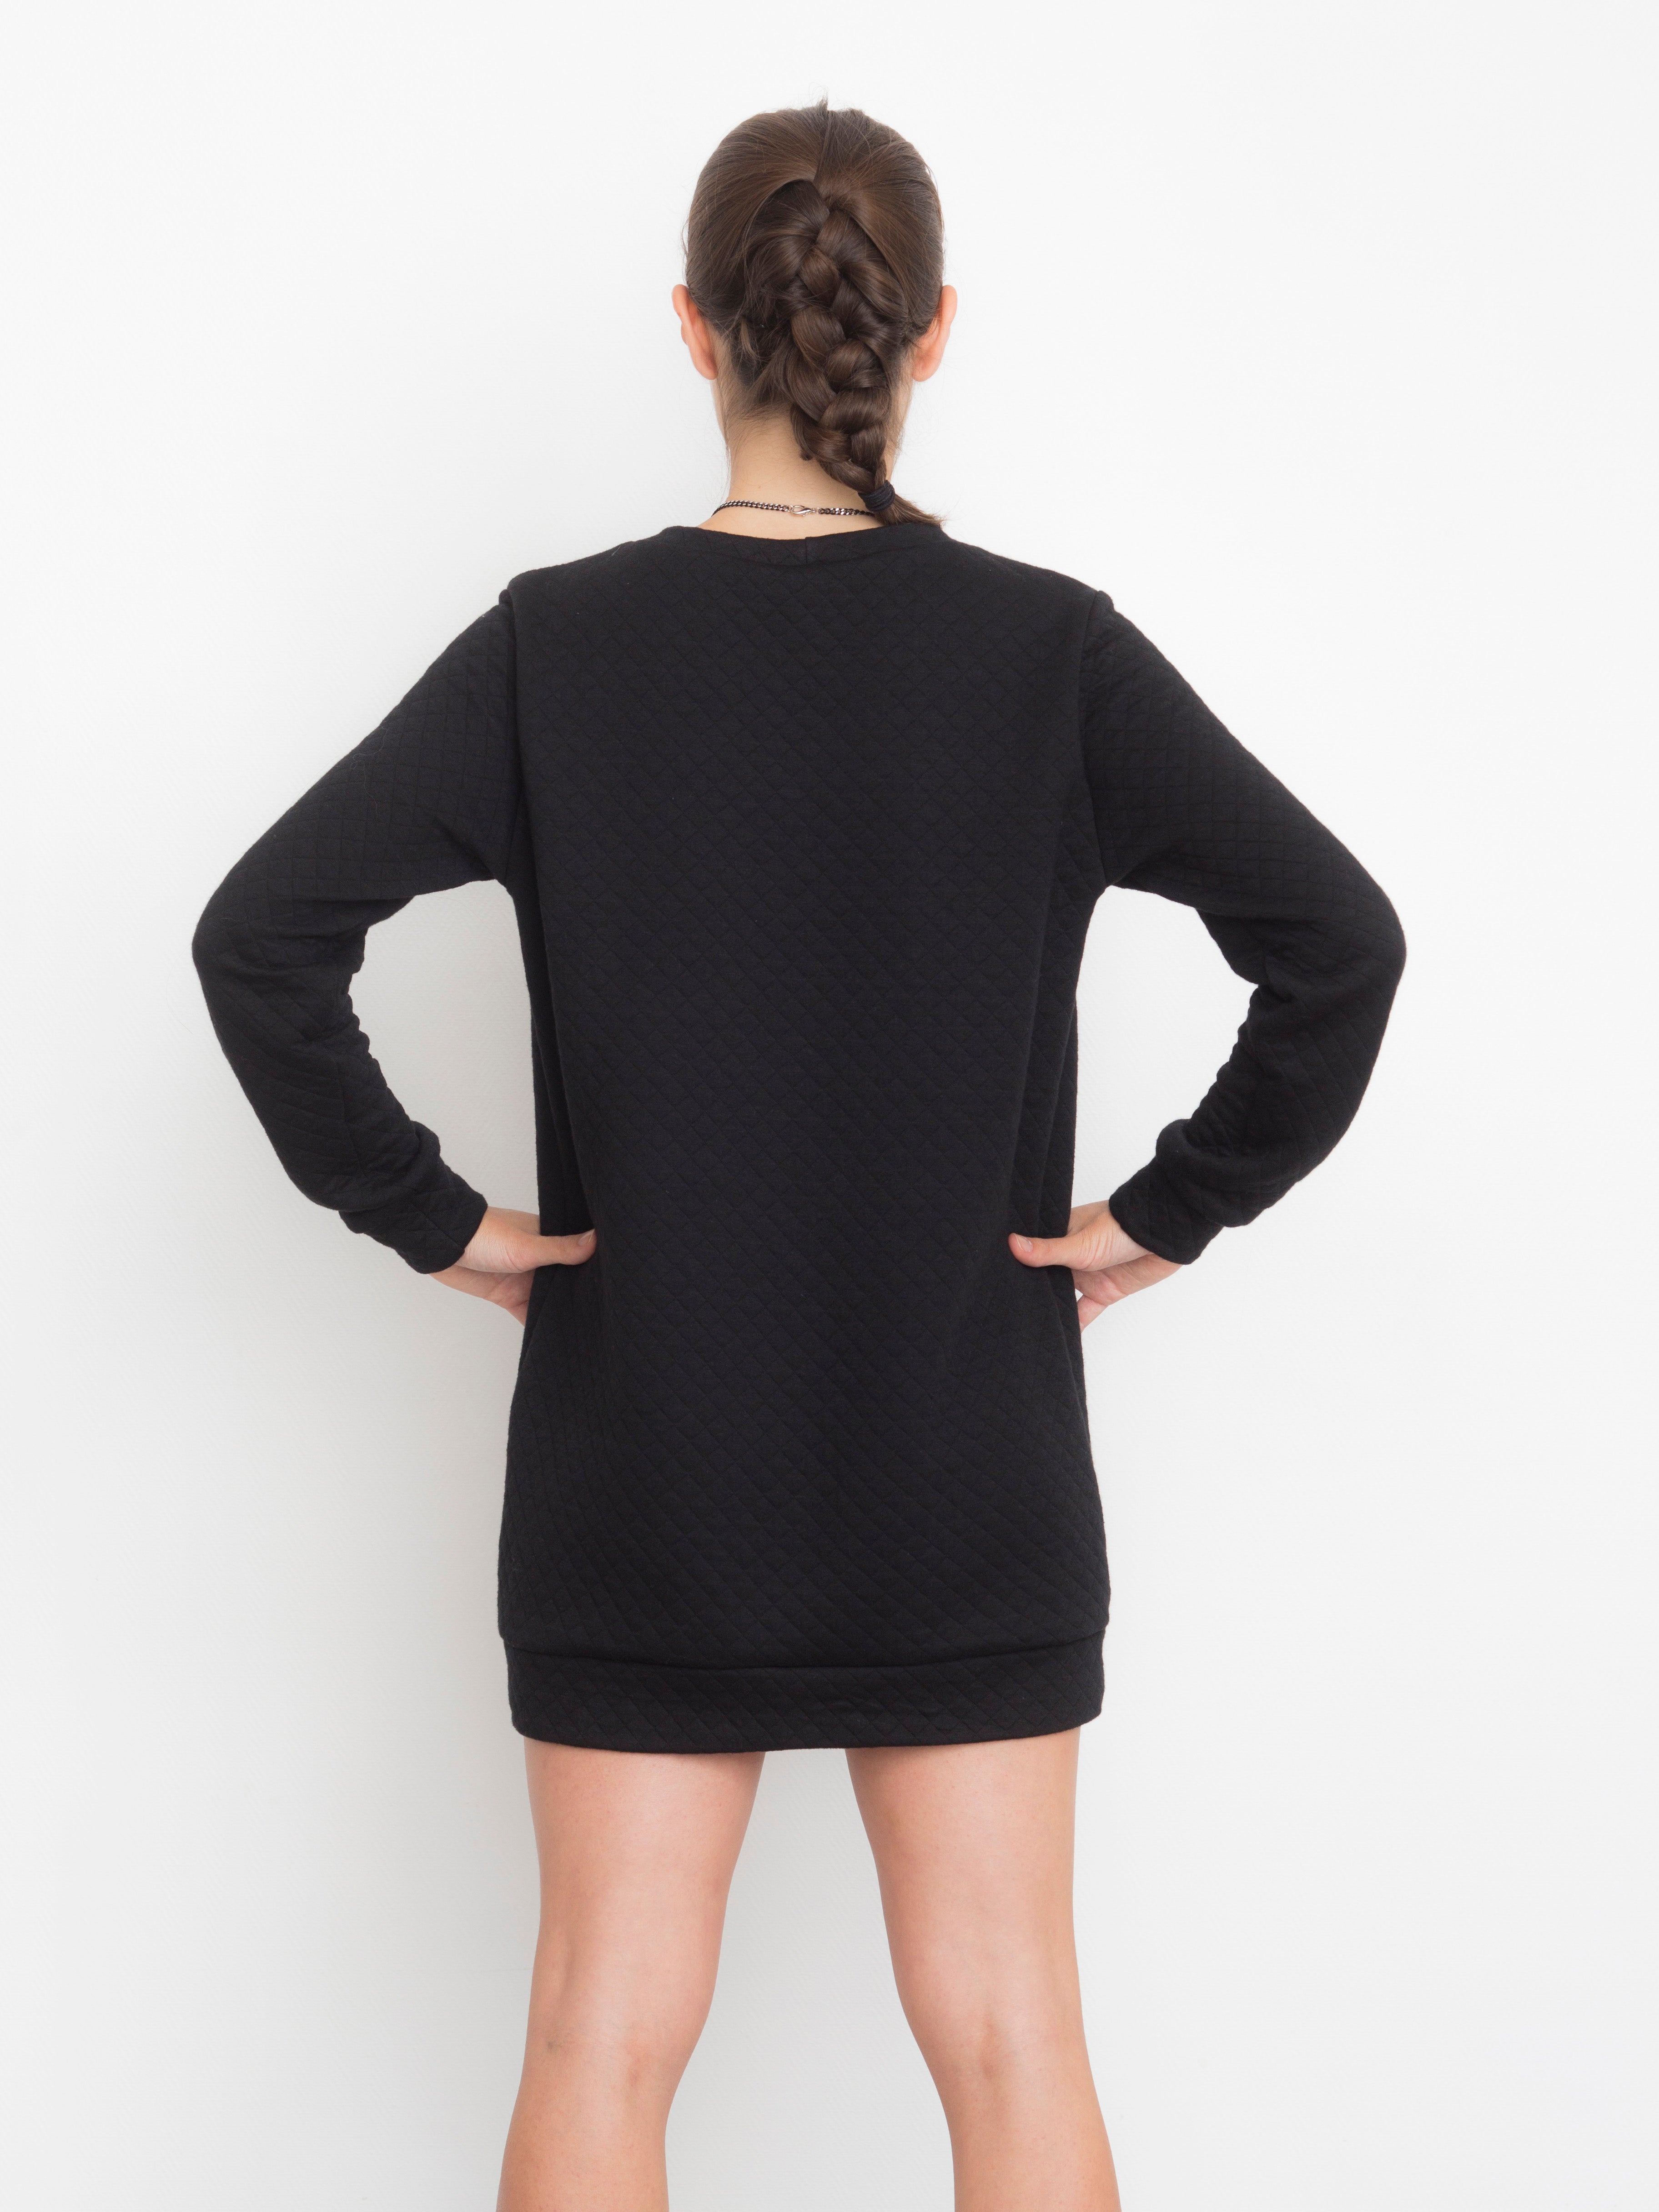 I AM - Apollon Classic Sweatshirt / Short Dress Sewing Pattern